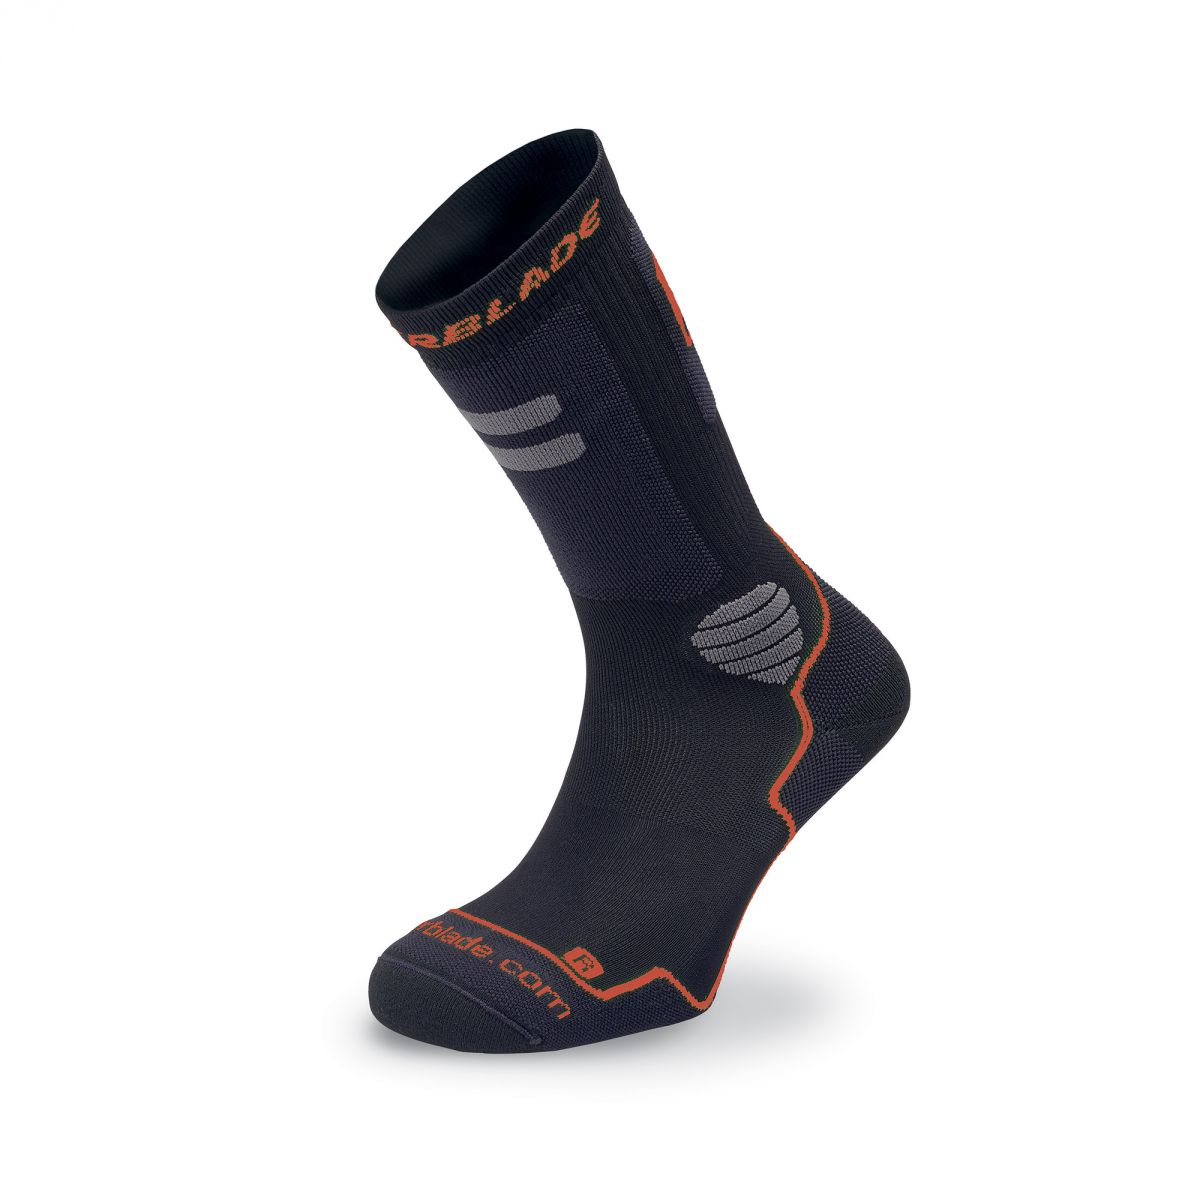 ROLLERBLADE - High perf. socks - Size M